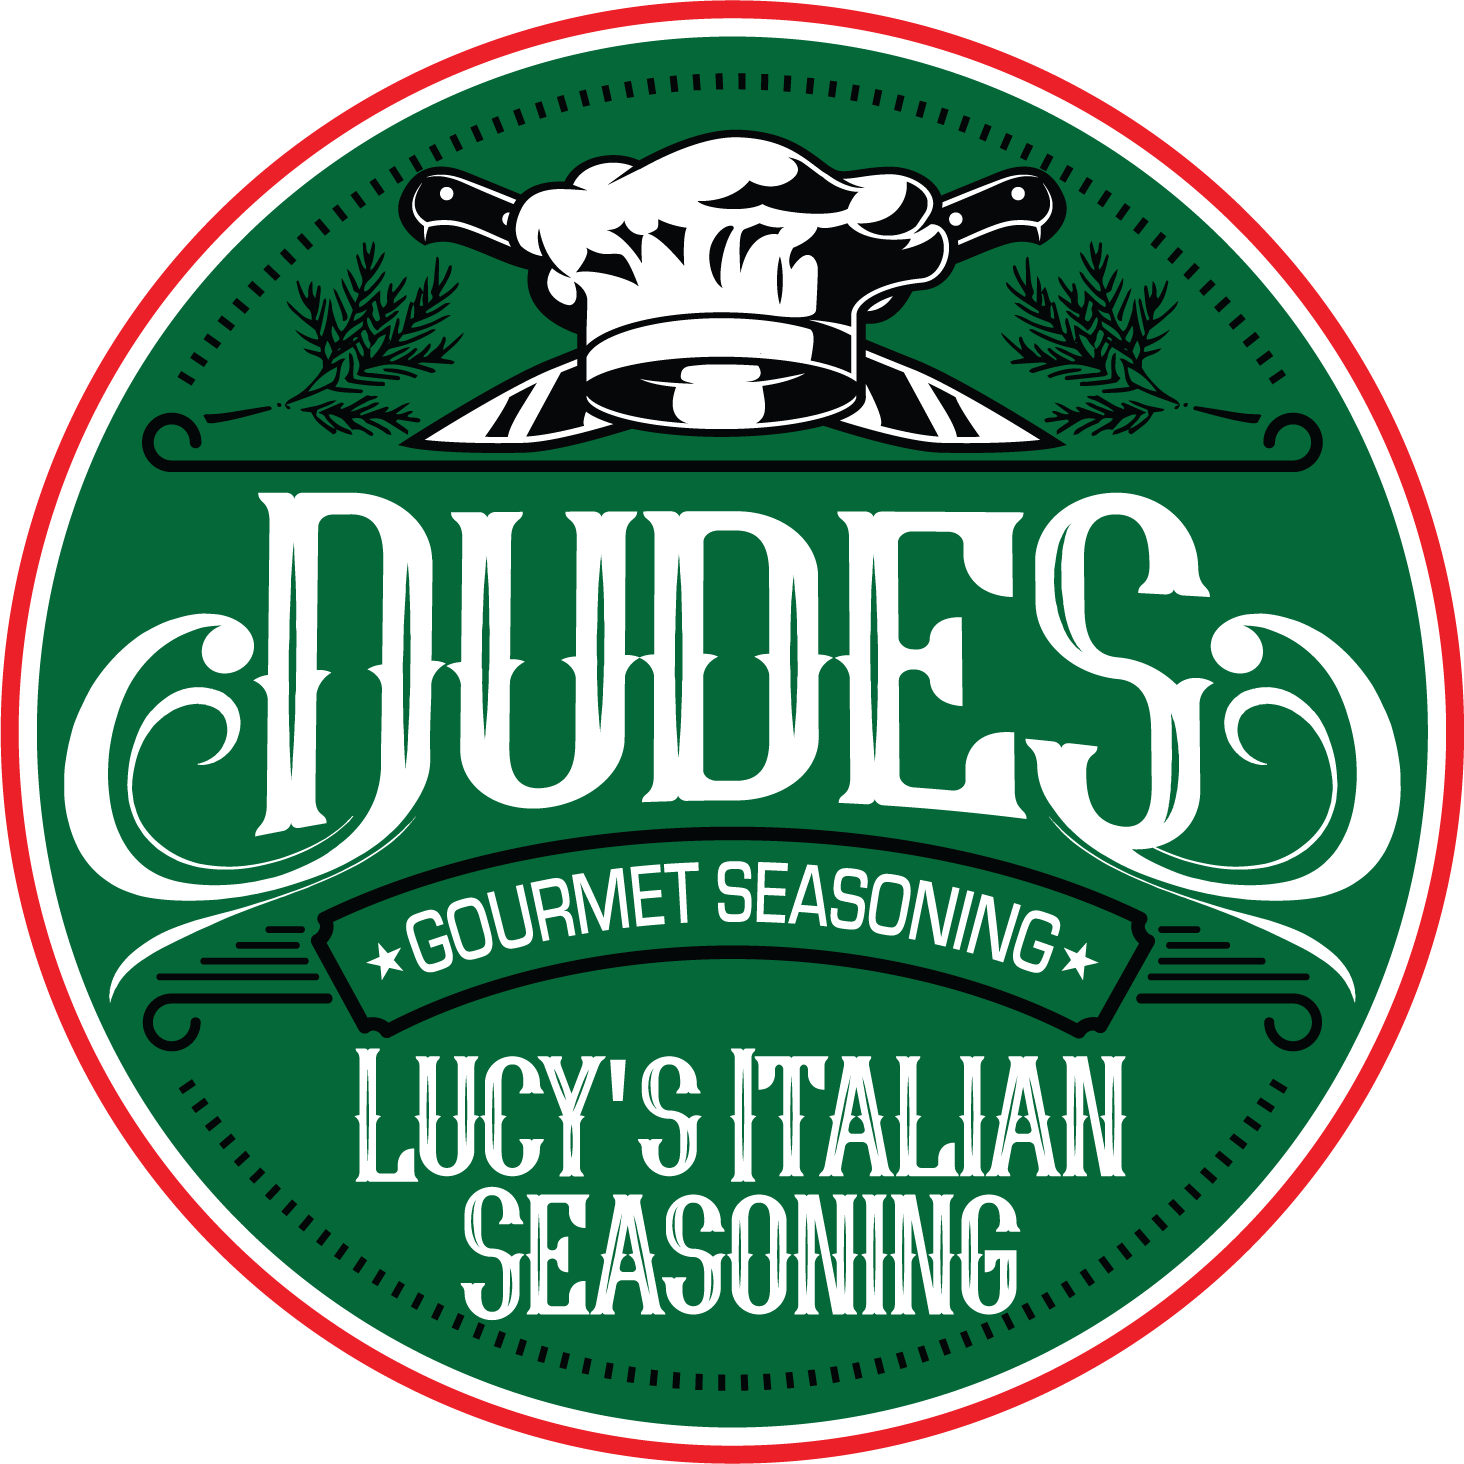 Lucy's Italian Seasoning